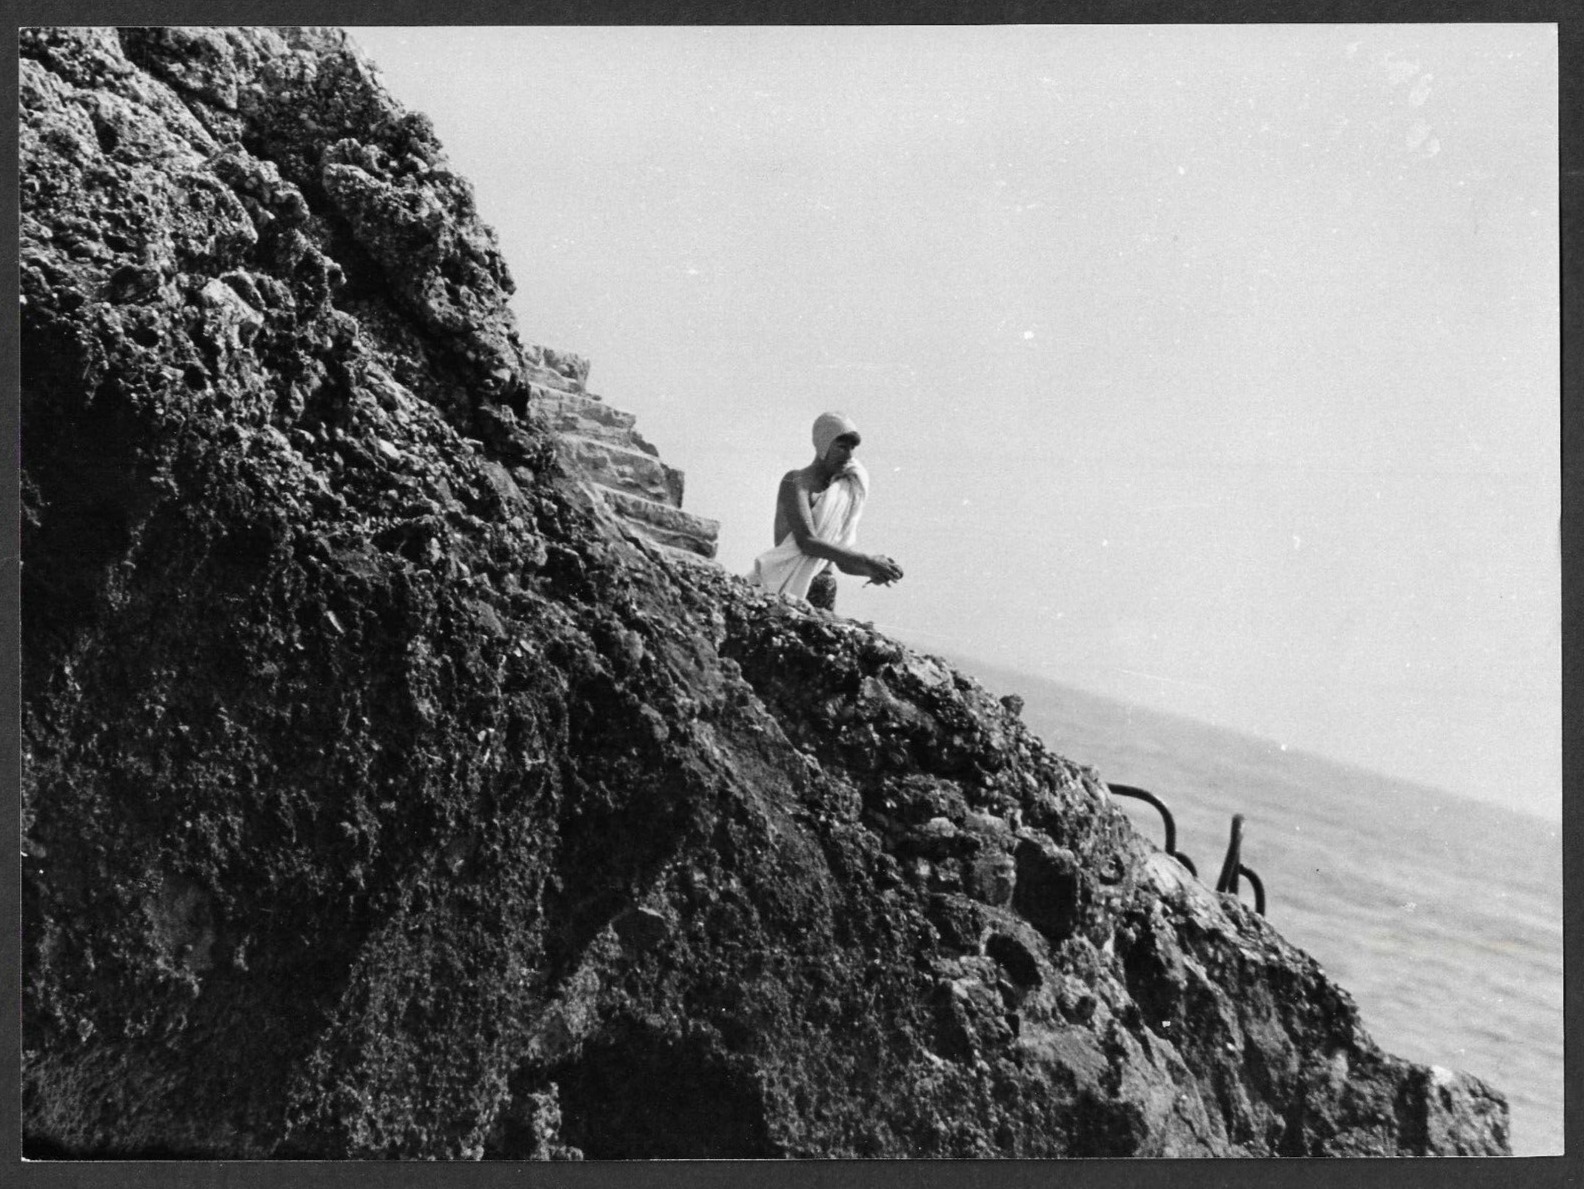 HOLLYWOOD GRETA GARBO ACTRESS SWIMMING AT THE BEACH VINTAGE ORIGINAL PHOTO